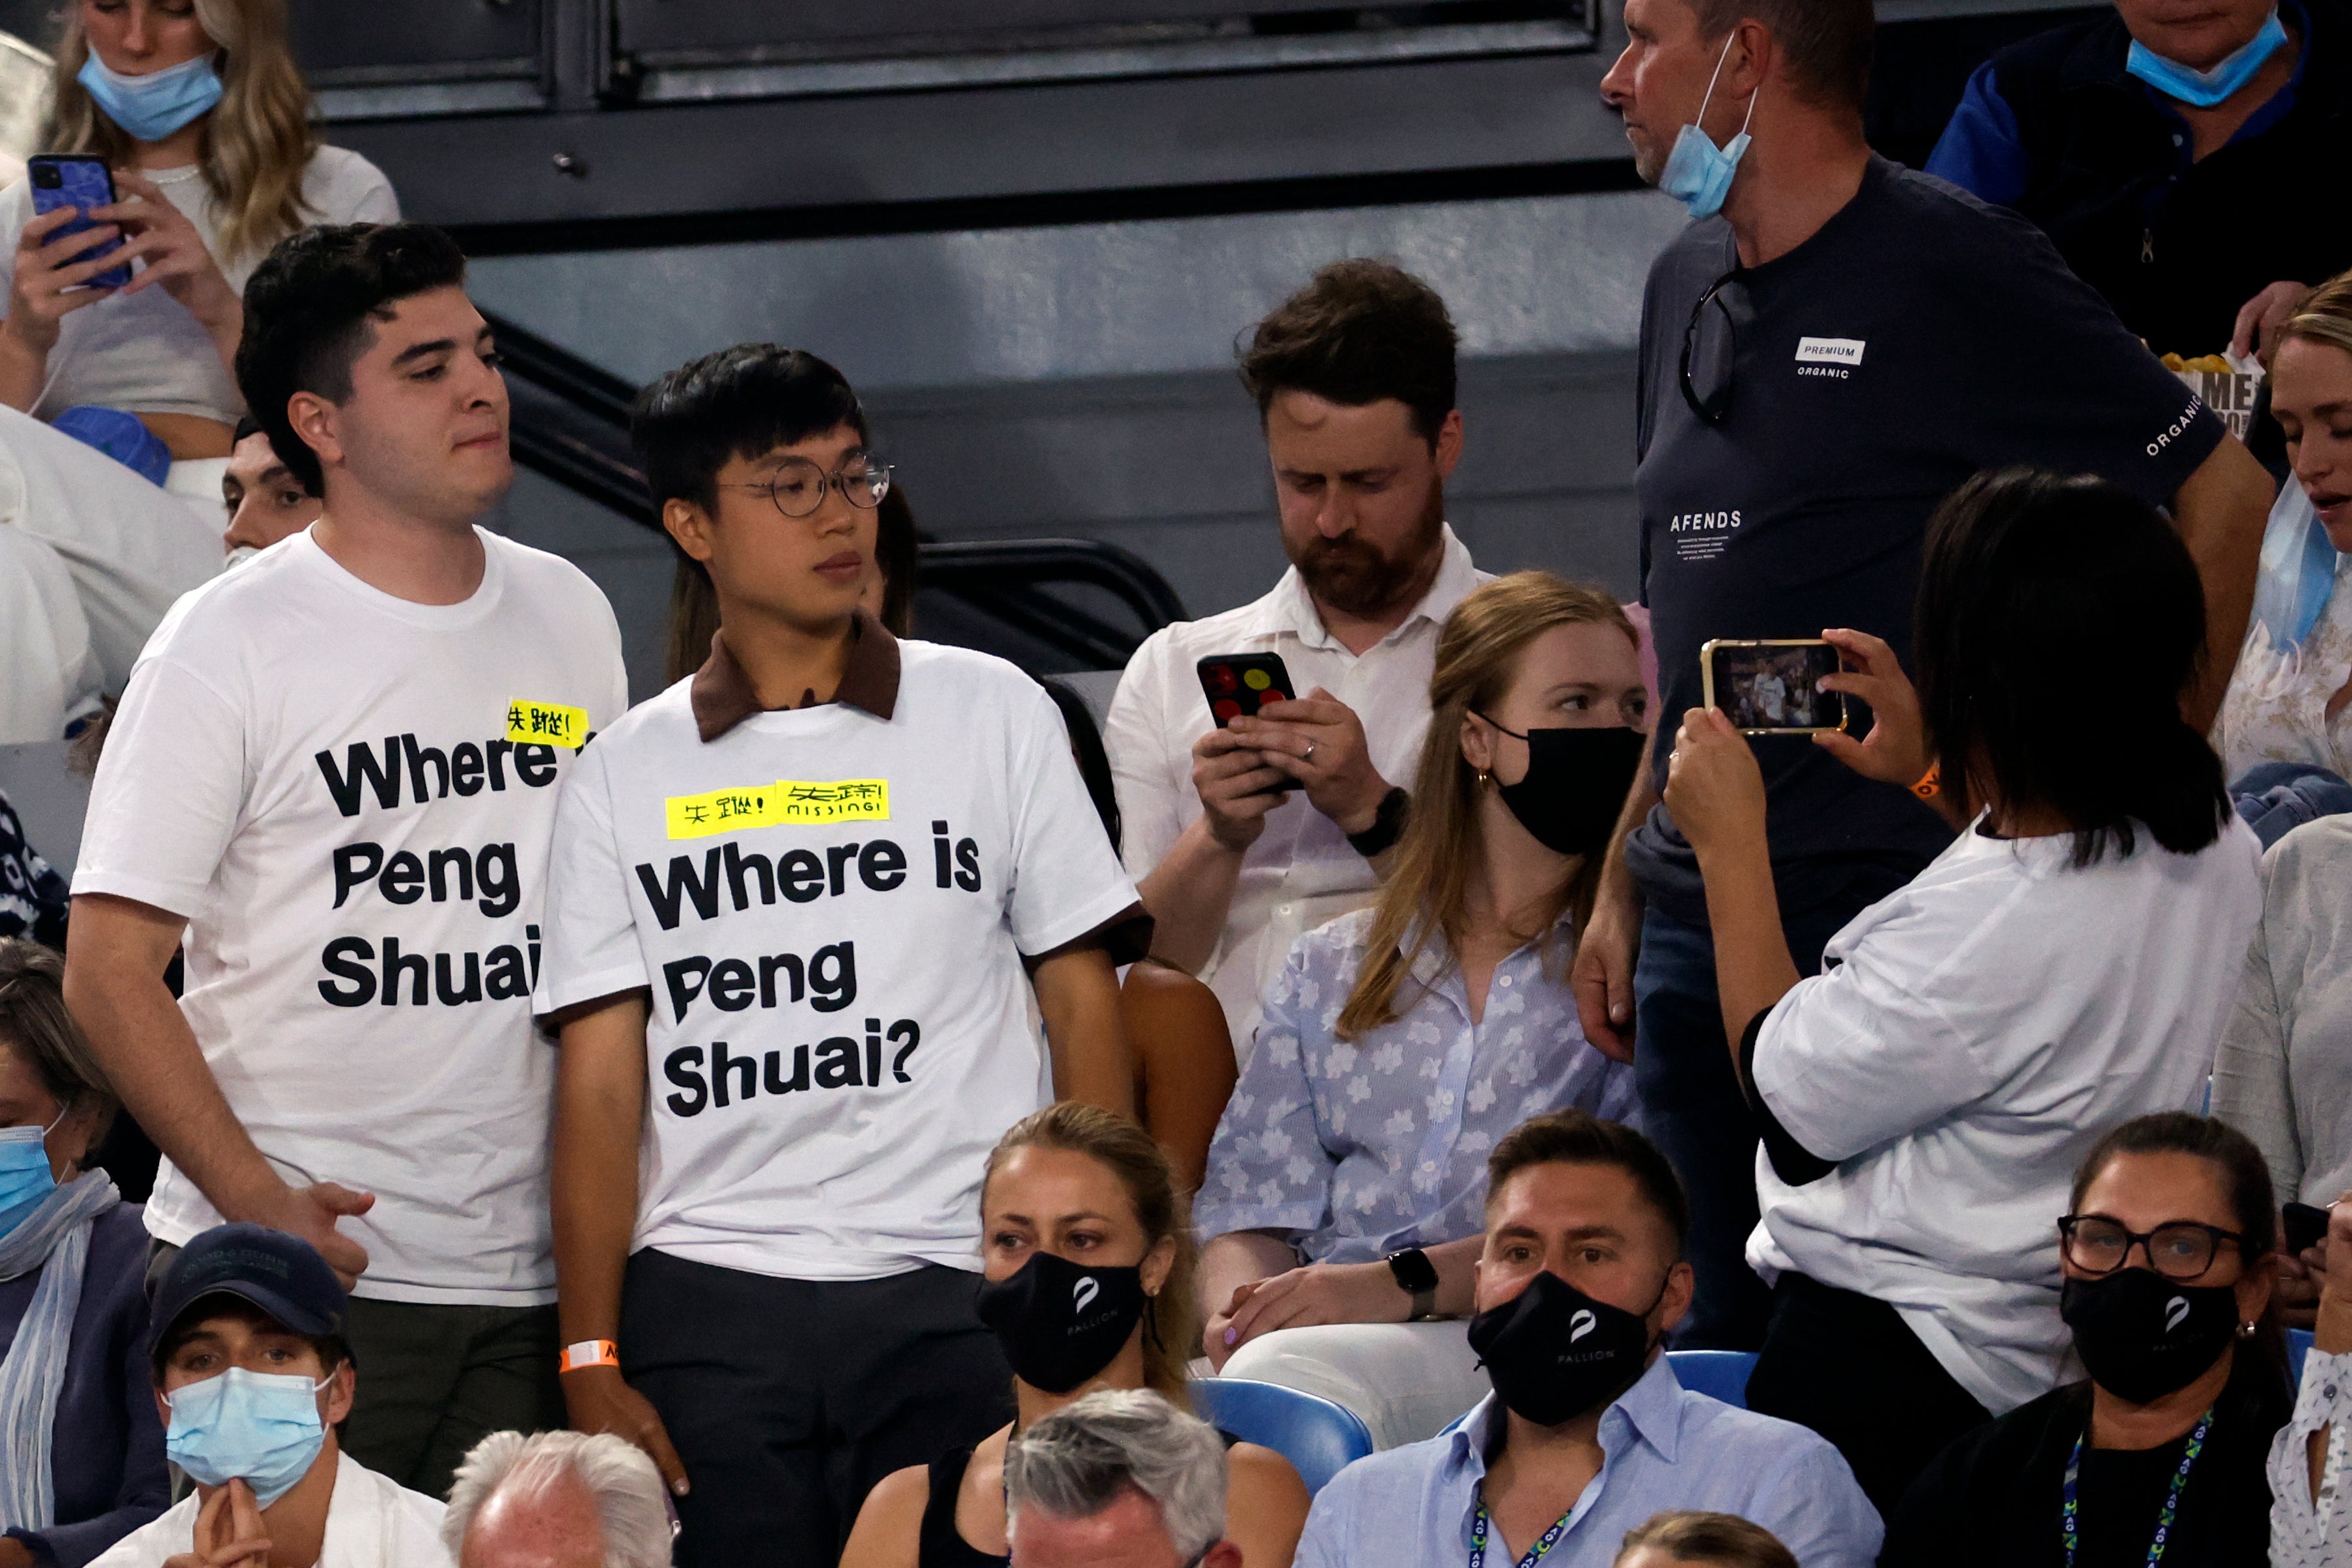 Peng Shuai T-shirts were visible in the crowd (Hamish Blair/AP)